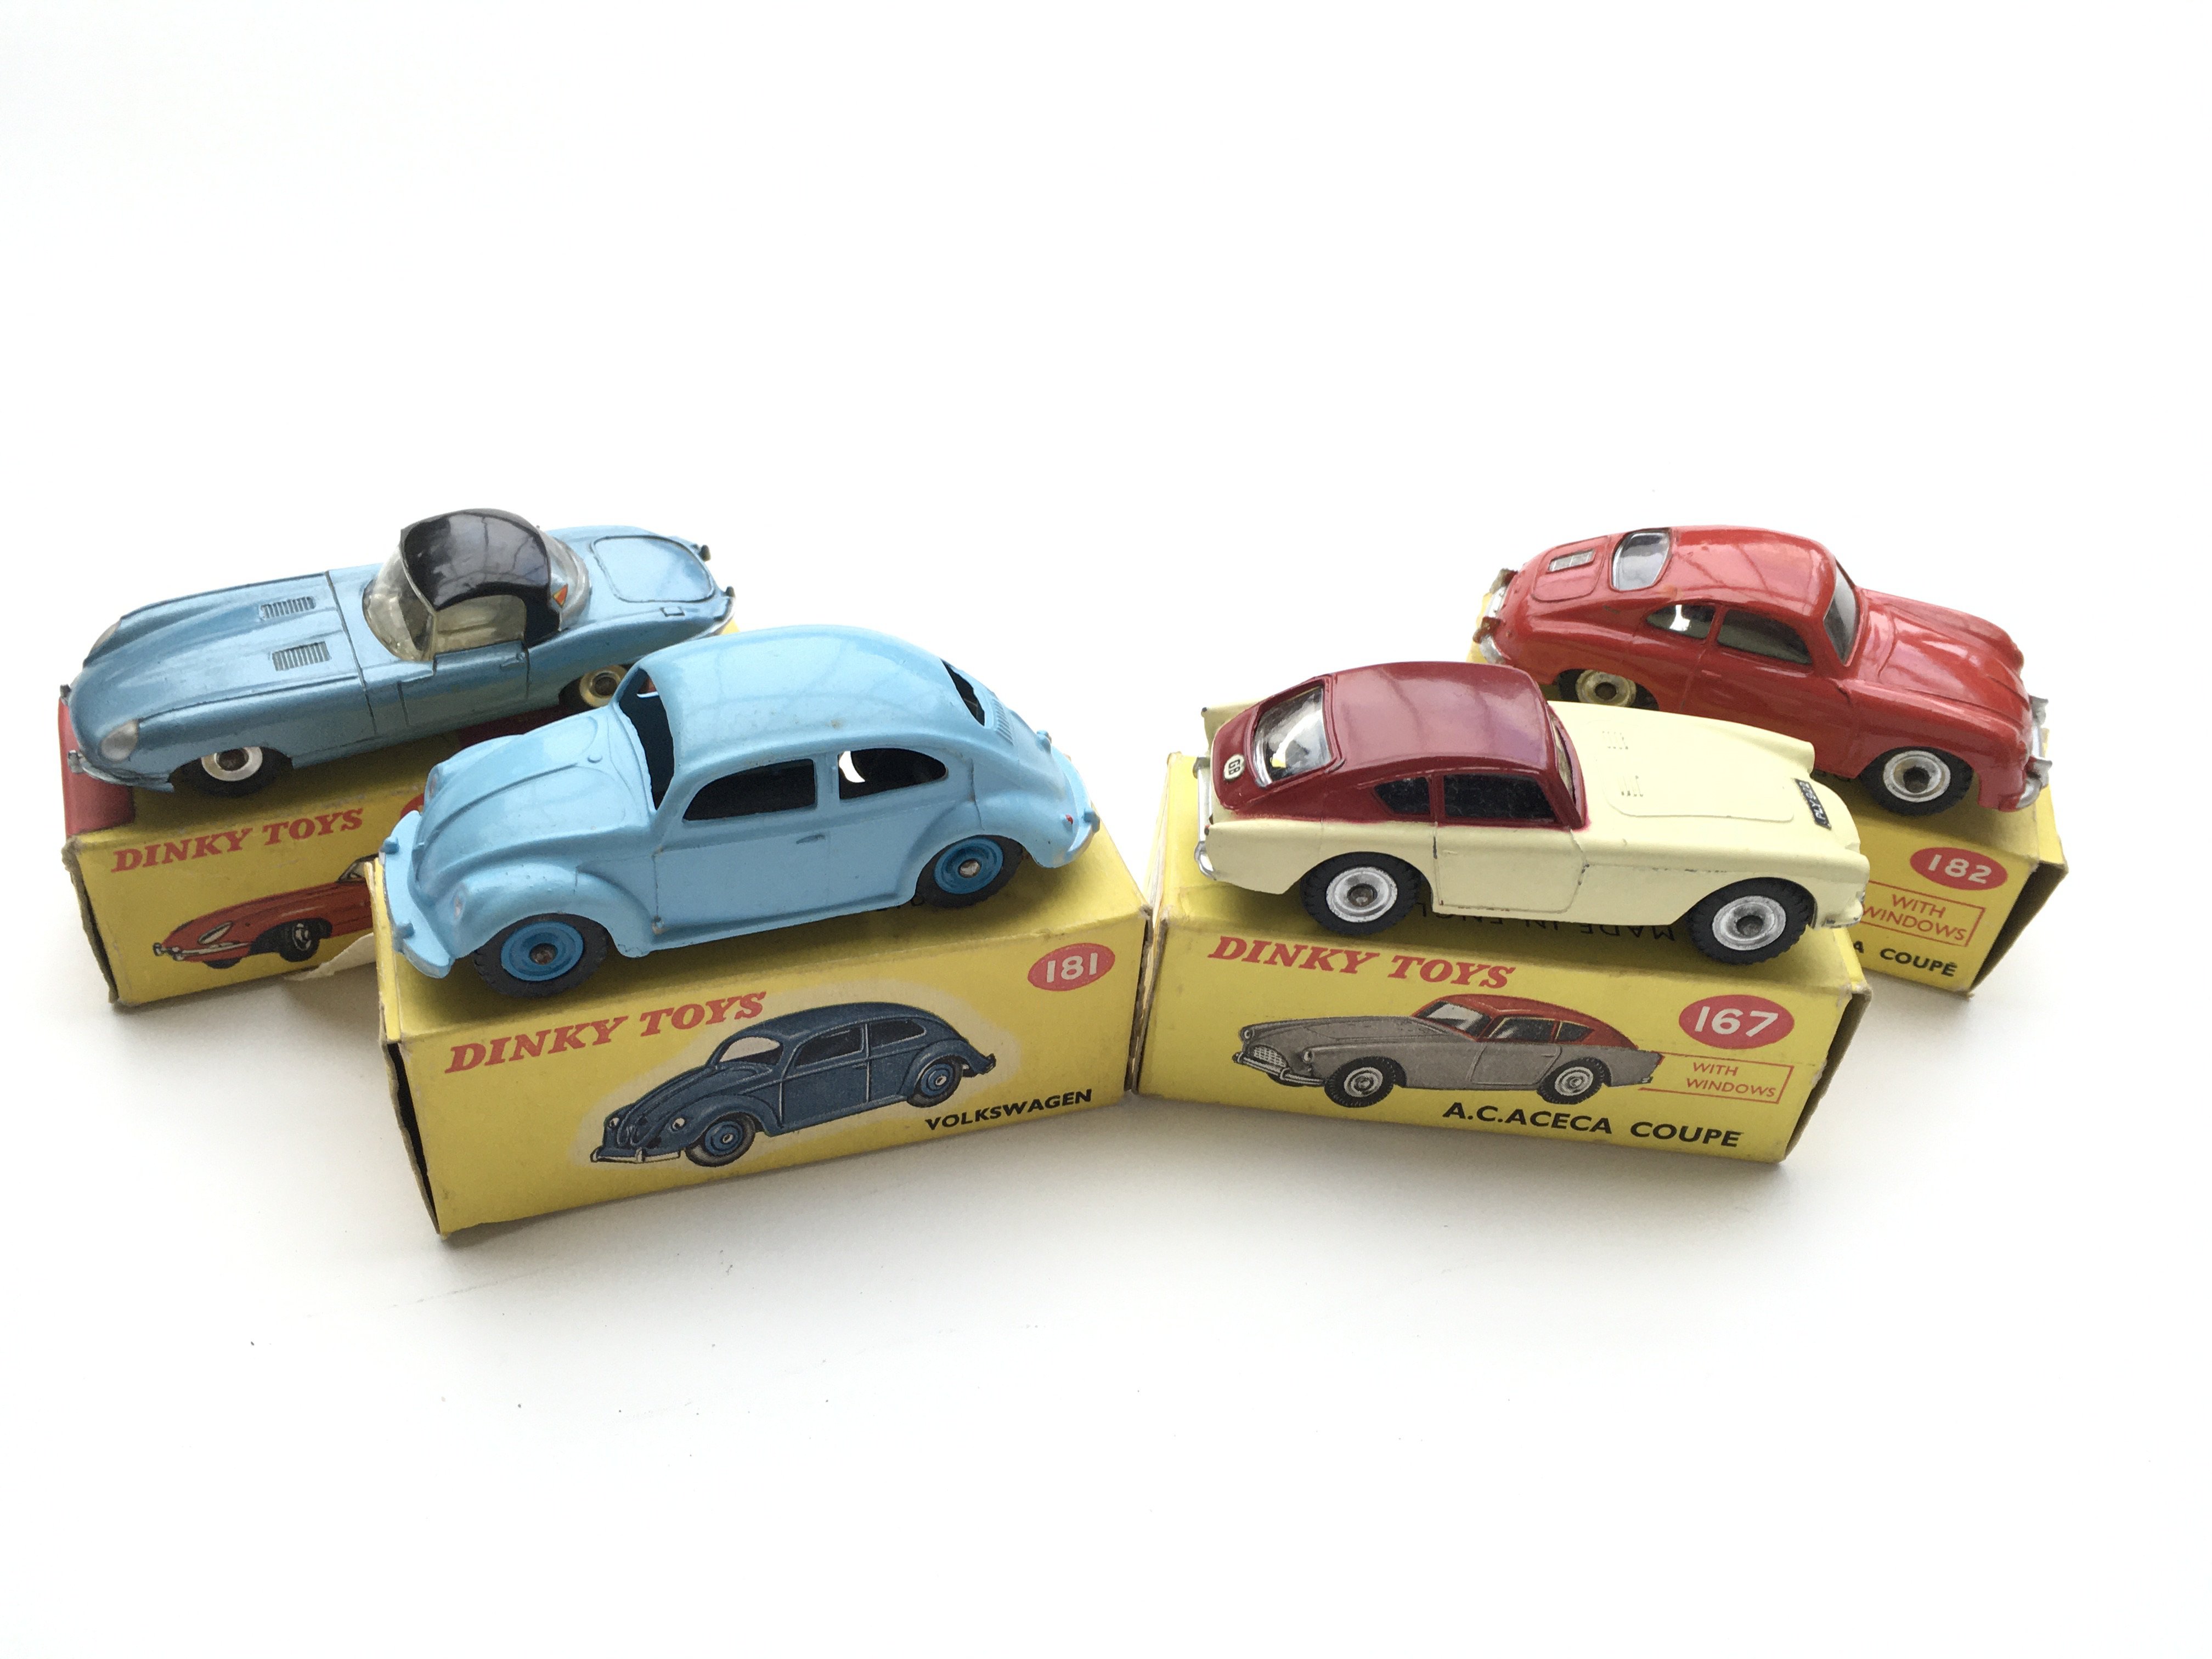 4 Boxed Dinky cars, #120 Jaguar “E” type, #181 Vol